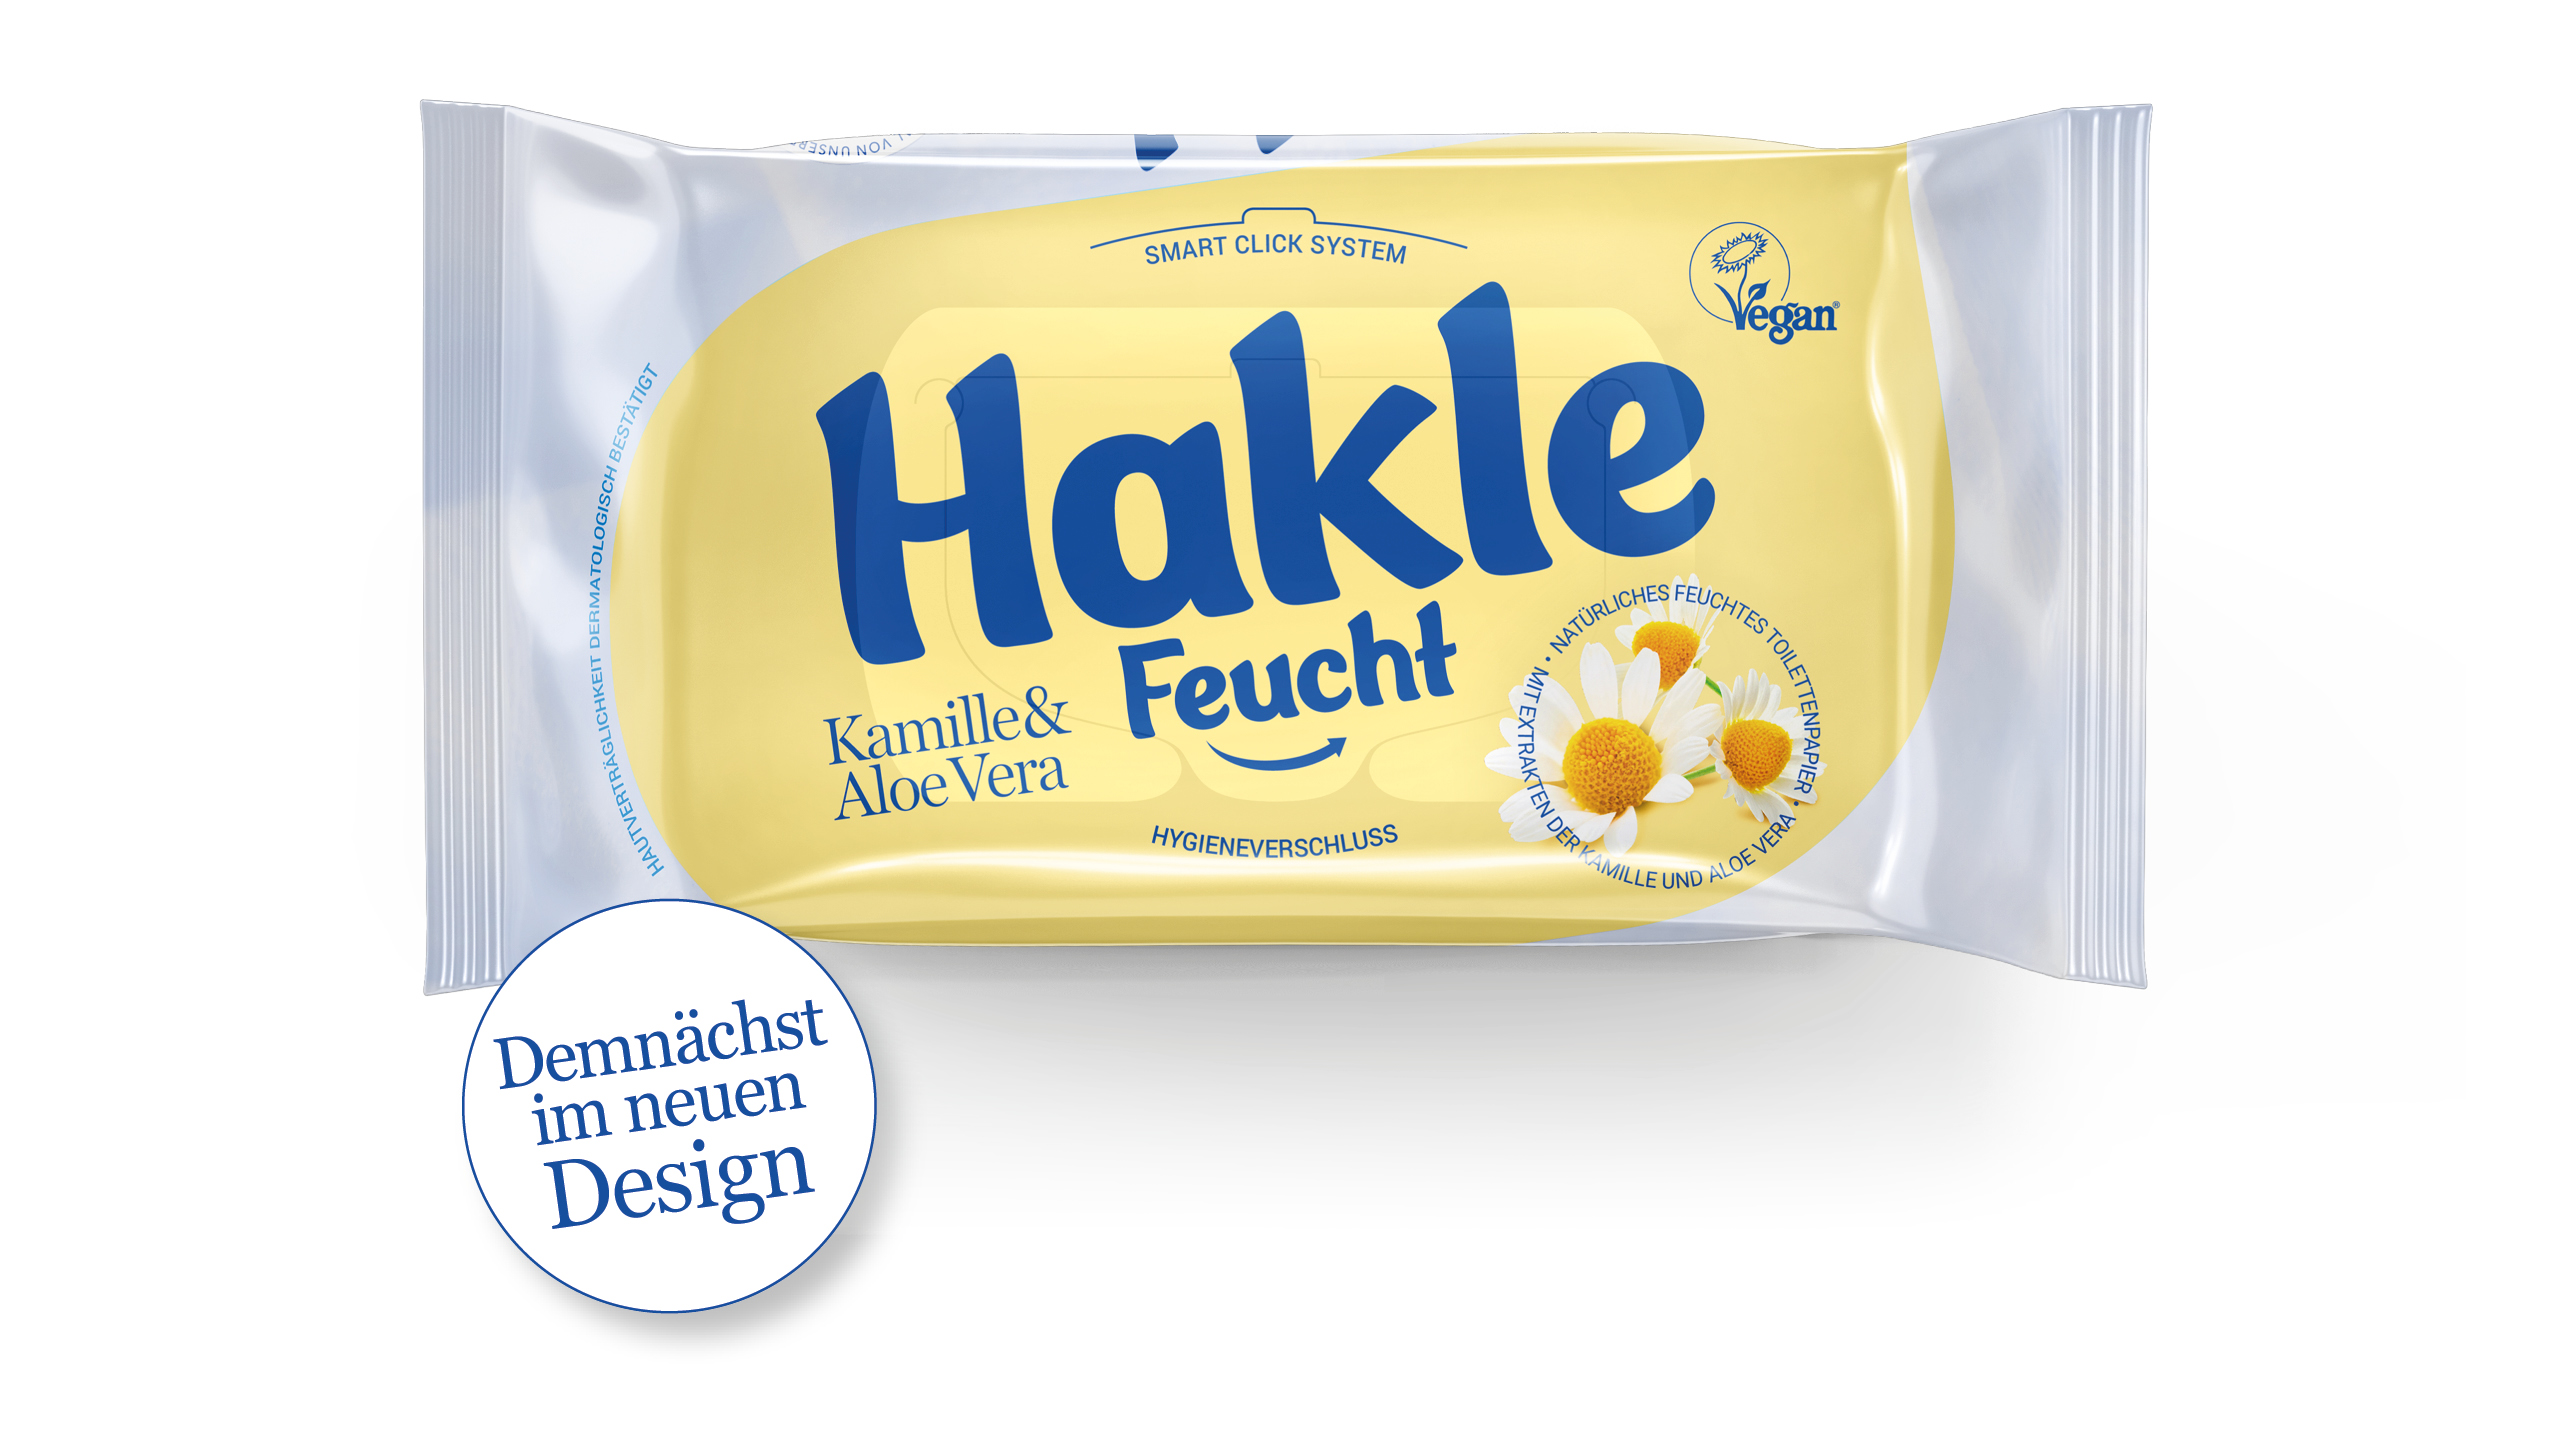 Hakle Feucht Kamille & Aloe Vera